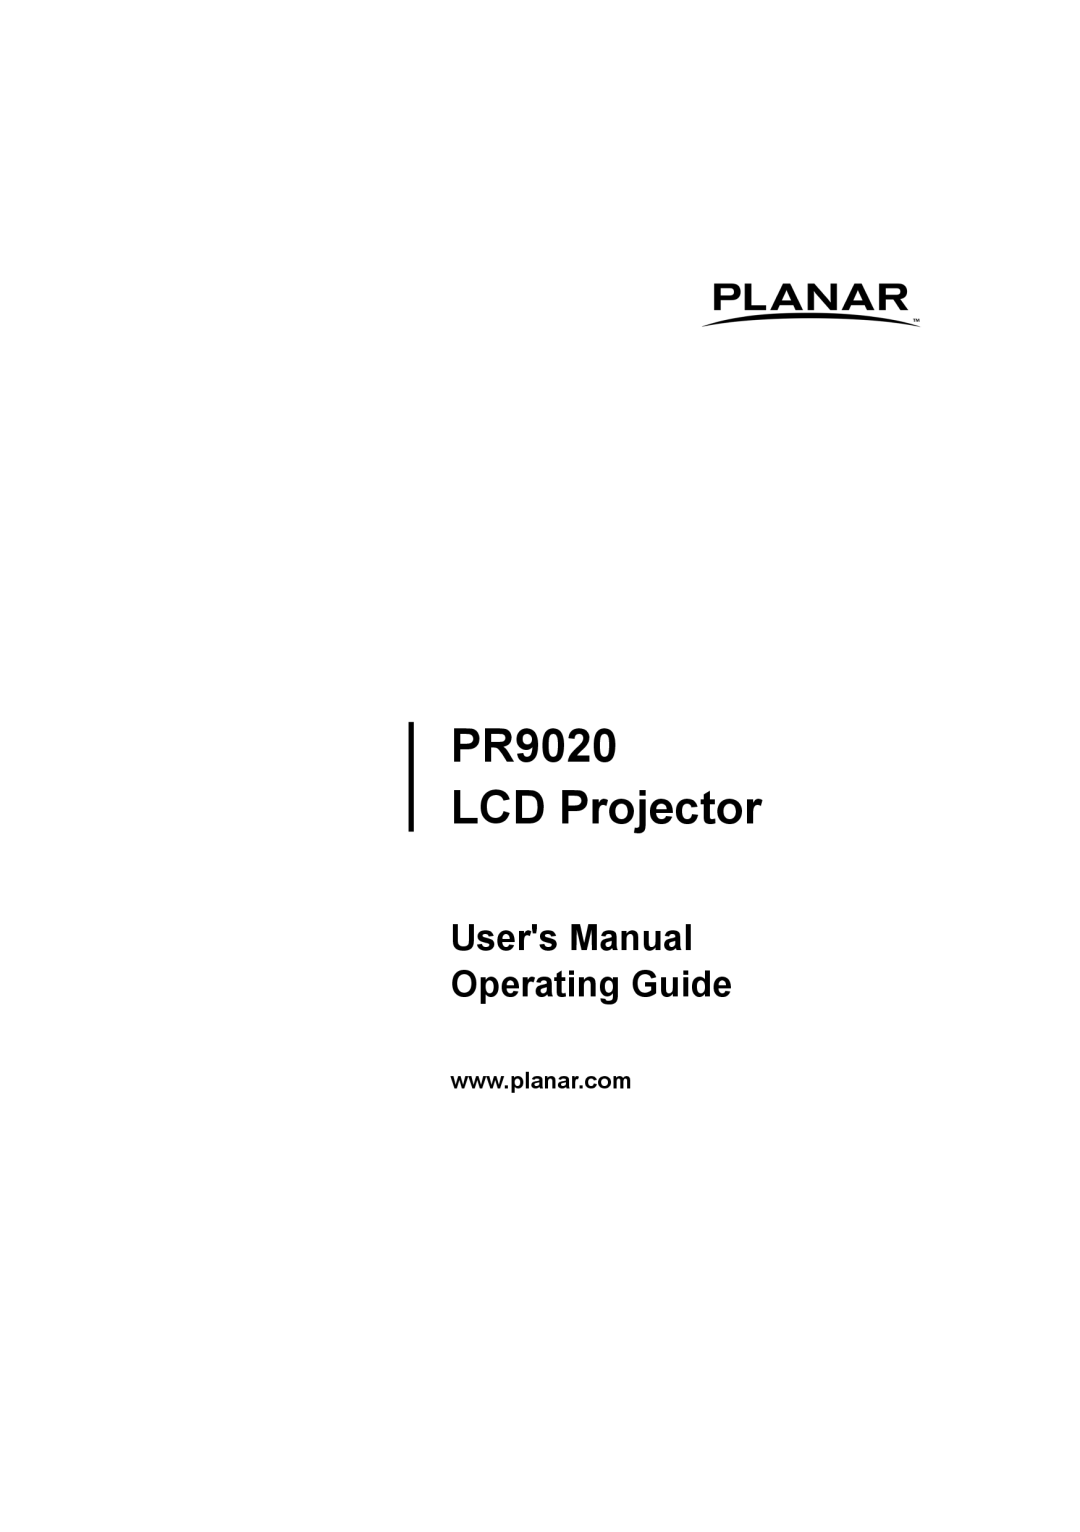 Planar user manual PR9020 LCD Projector, Users Manual Operating Guide 